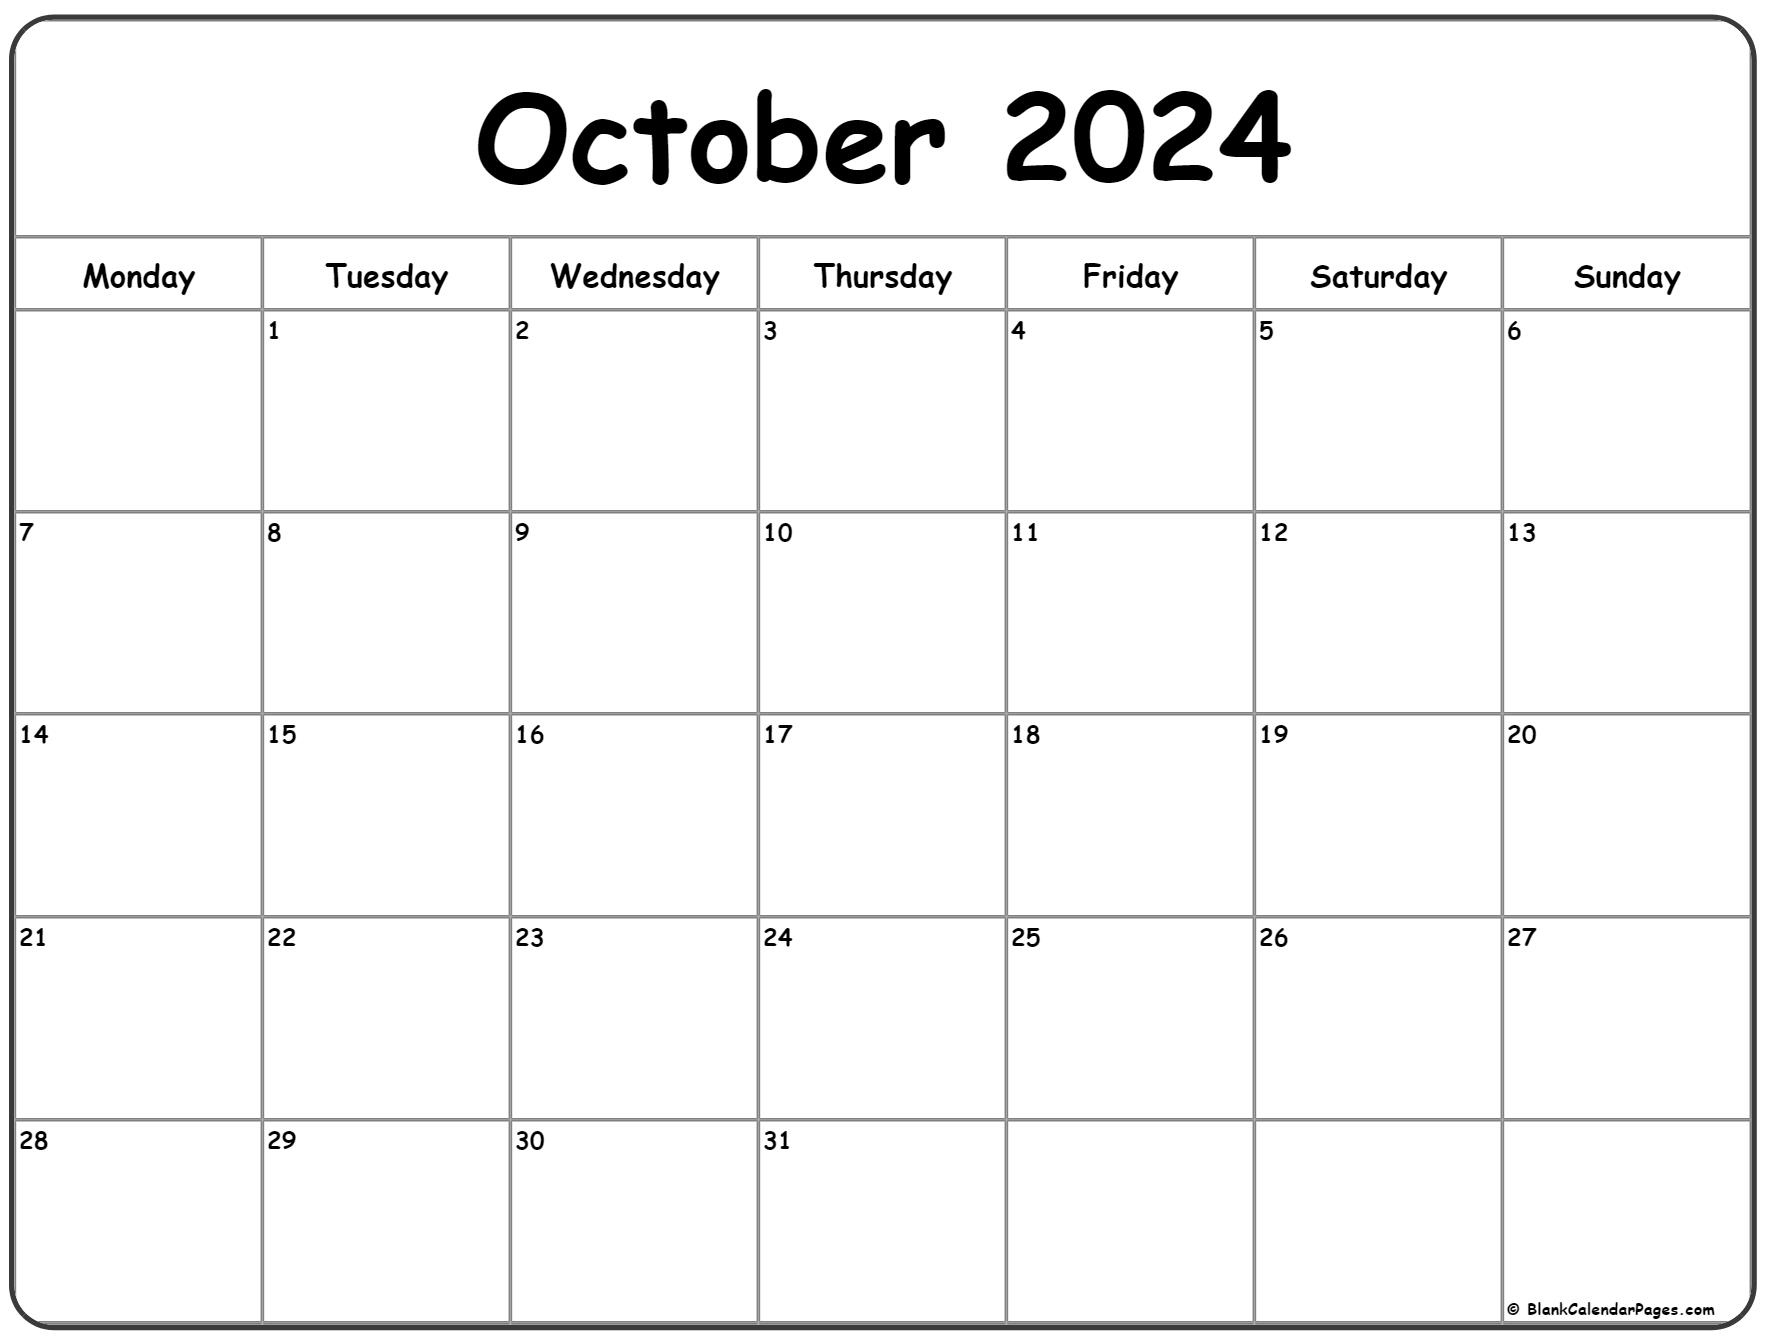 October 2024 Monday Calendar | Monday To Sunday pertaining to Free Printable Calendar 2024 October And November